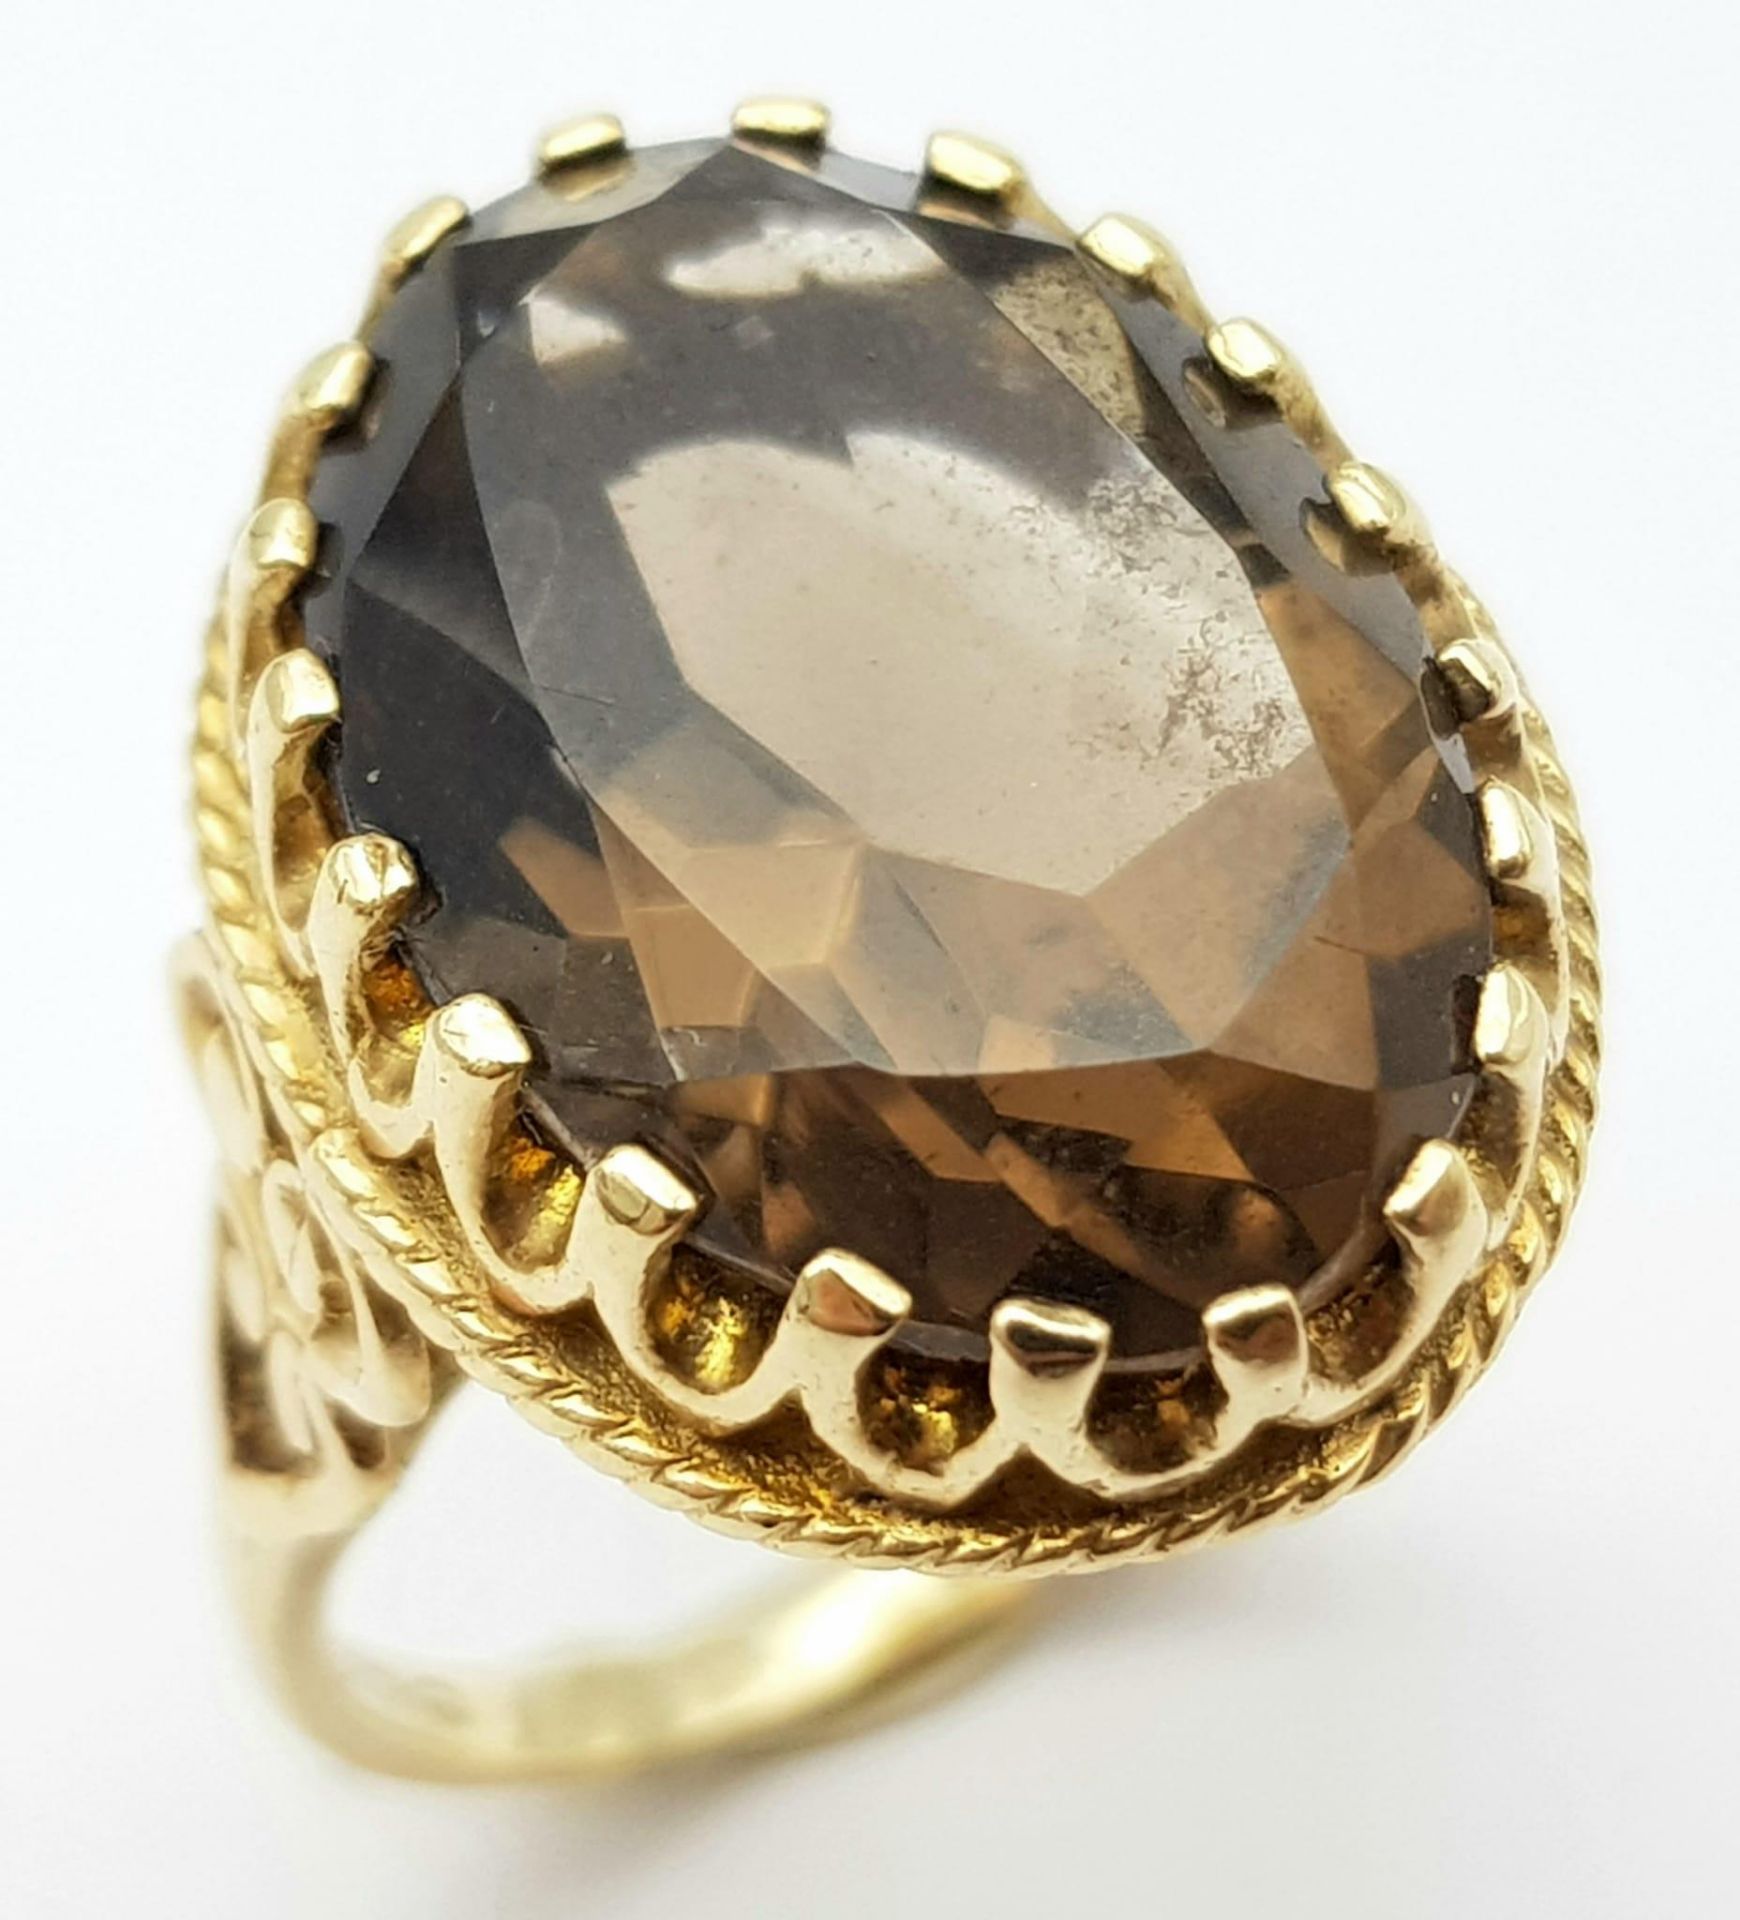 A Vintage 9K Yellow Gold Smoky Quartz Ring. Large oval cut 10ct smoky quartz in a decorative